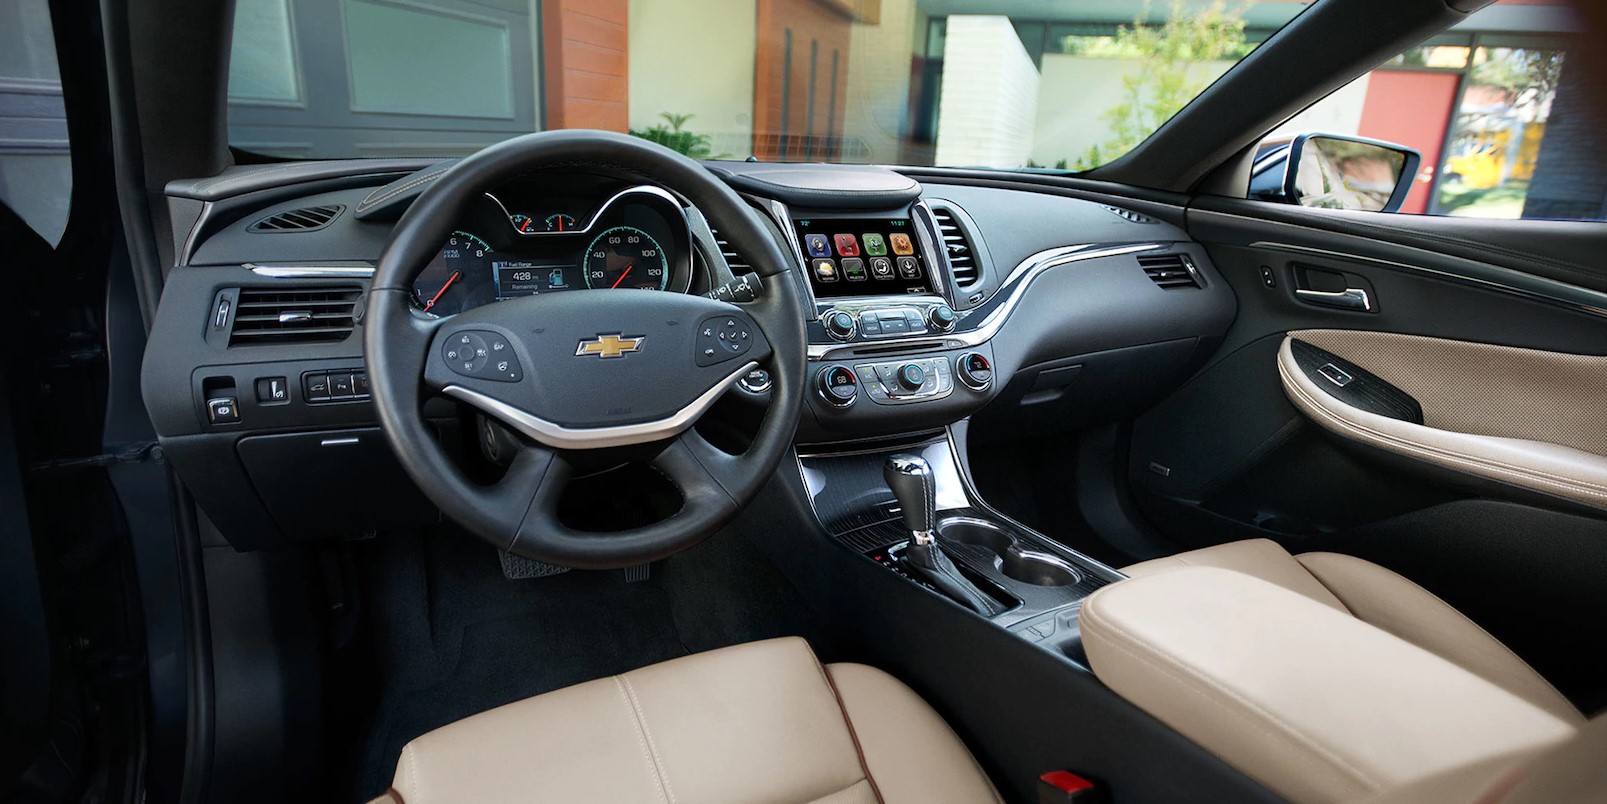 2018 Chevrolet Impala Blck Leather Interior